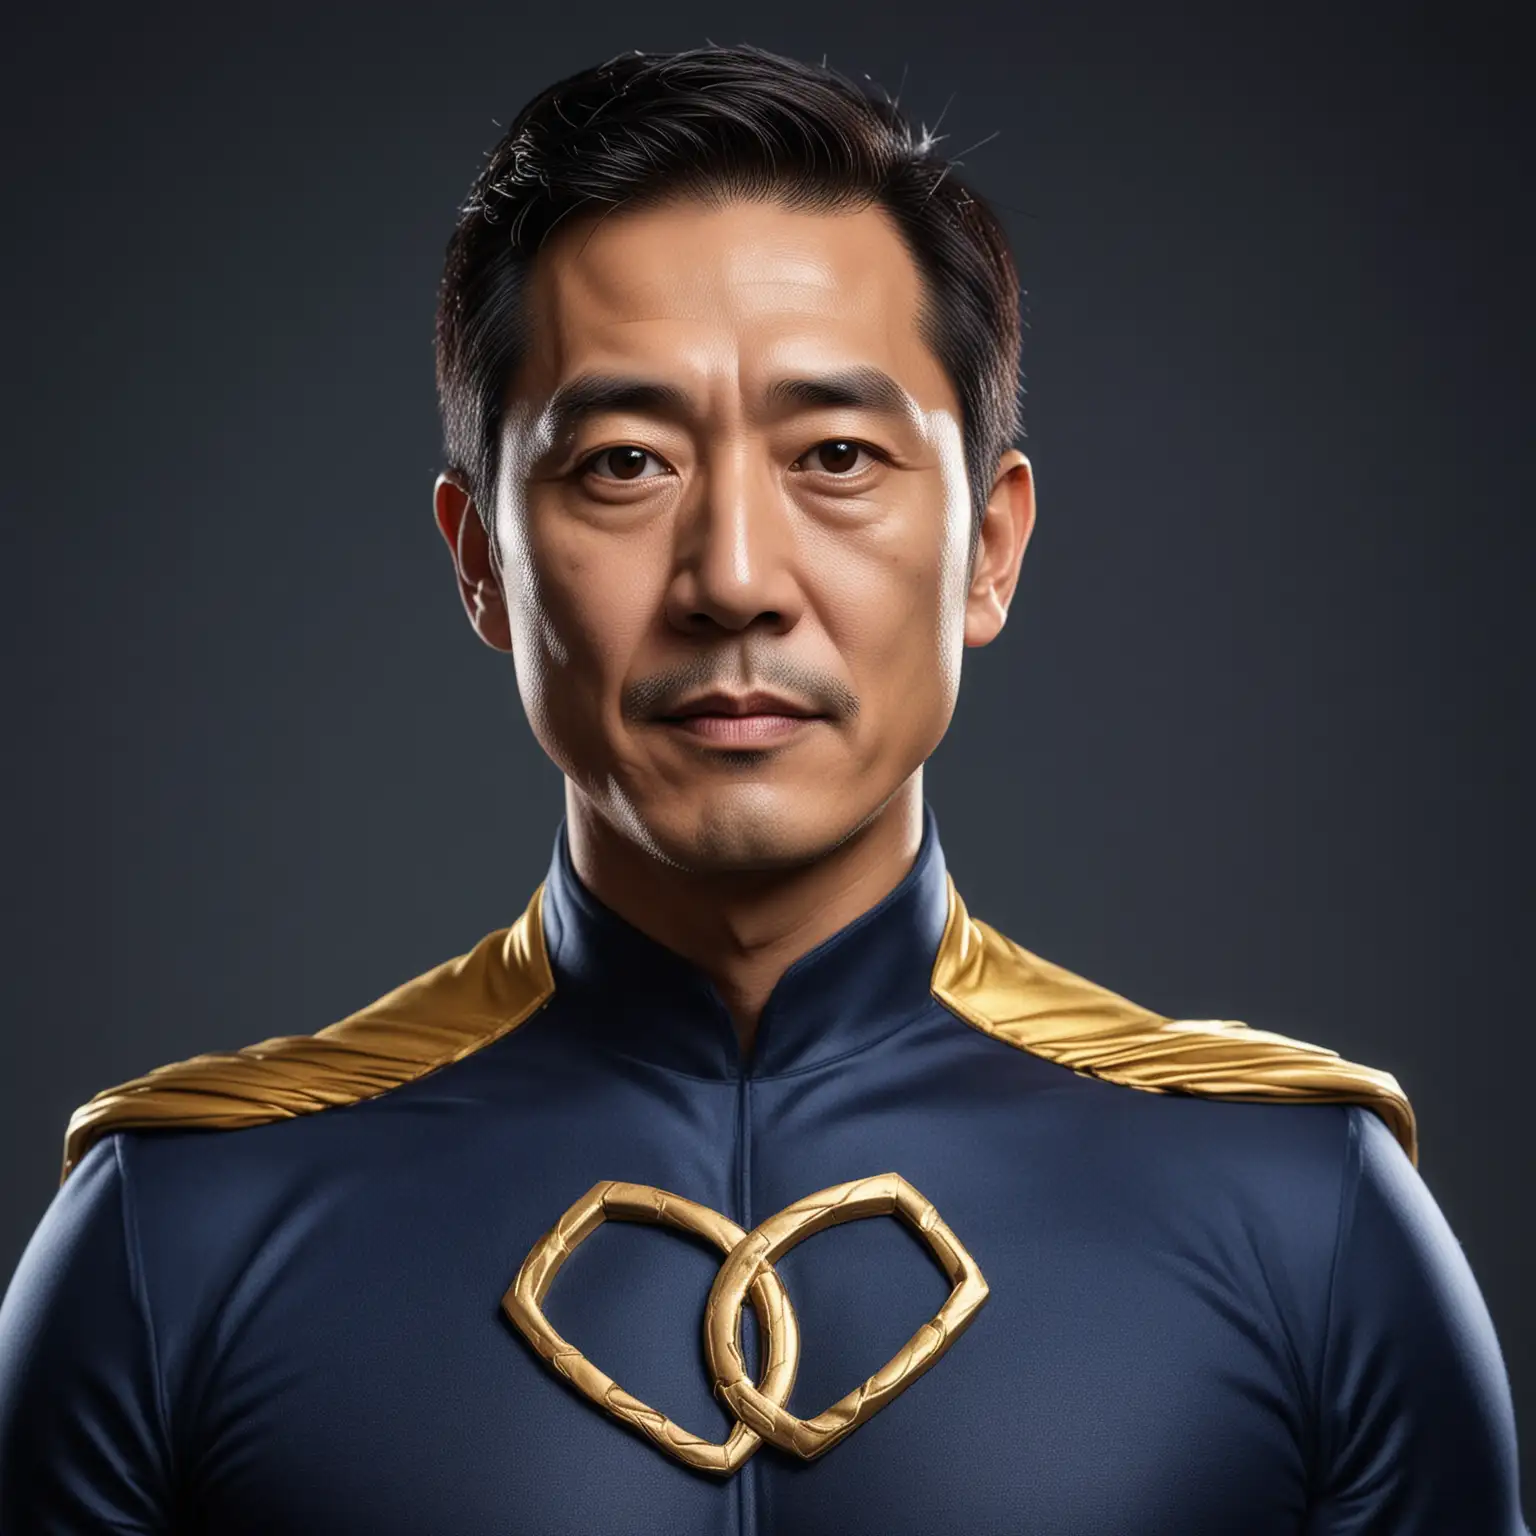 Headshot of MiddleAged Asian Man in MarvelStyle Superhero Costume